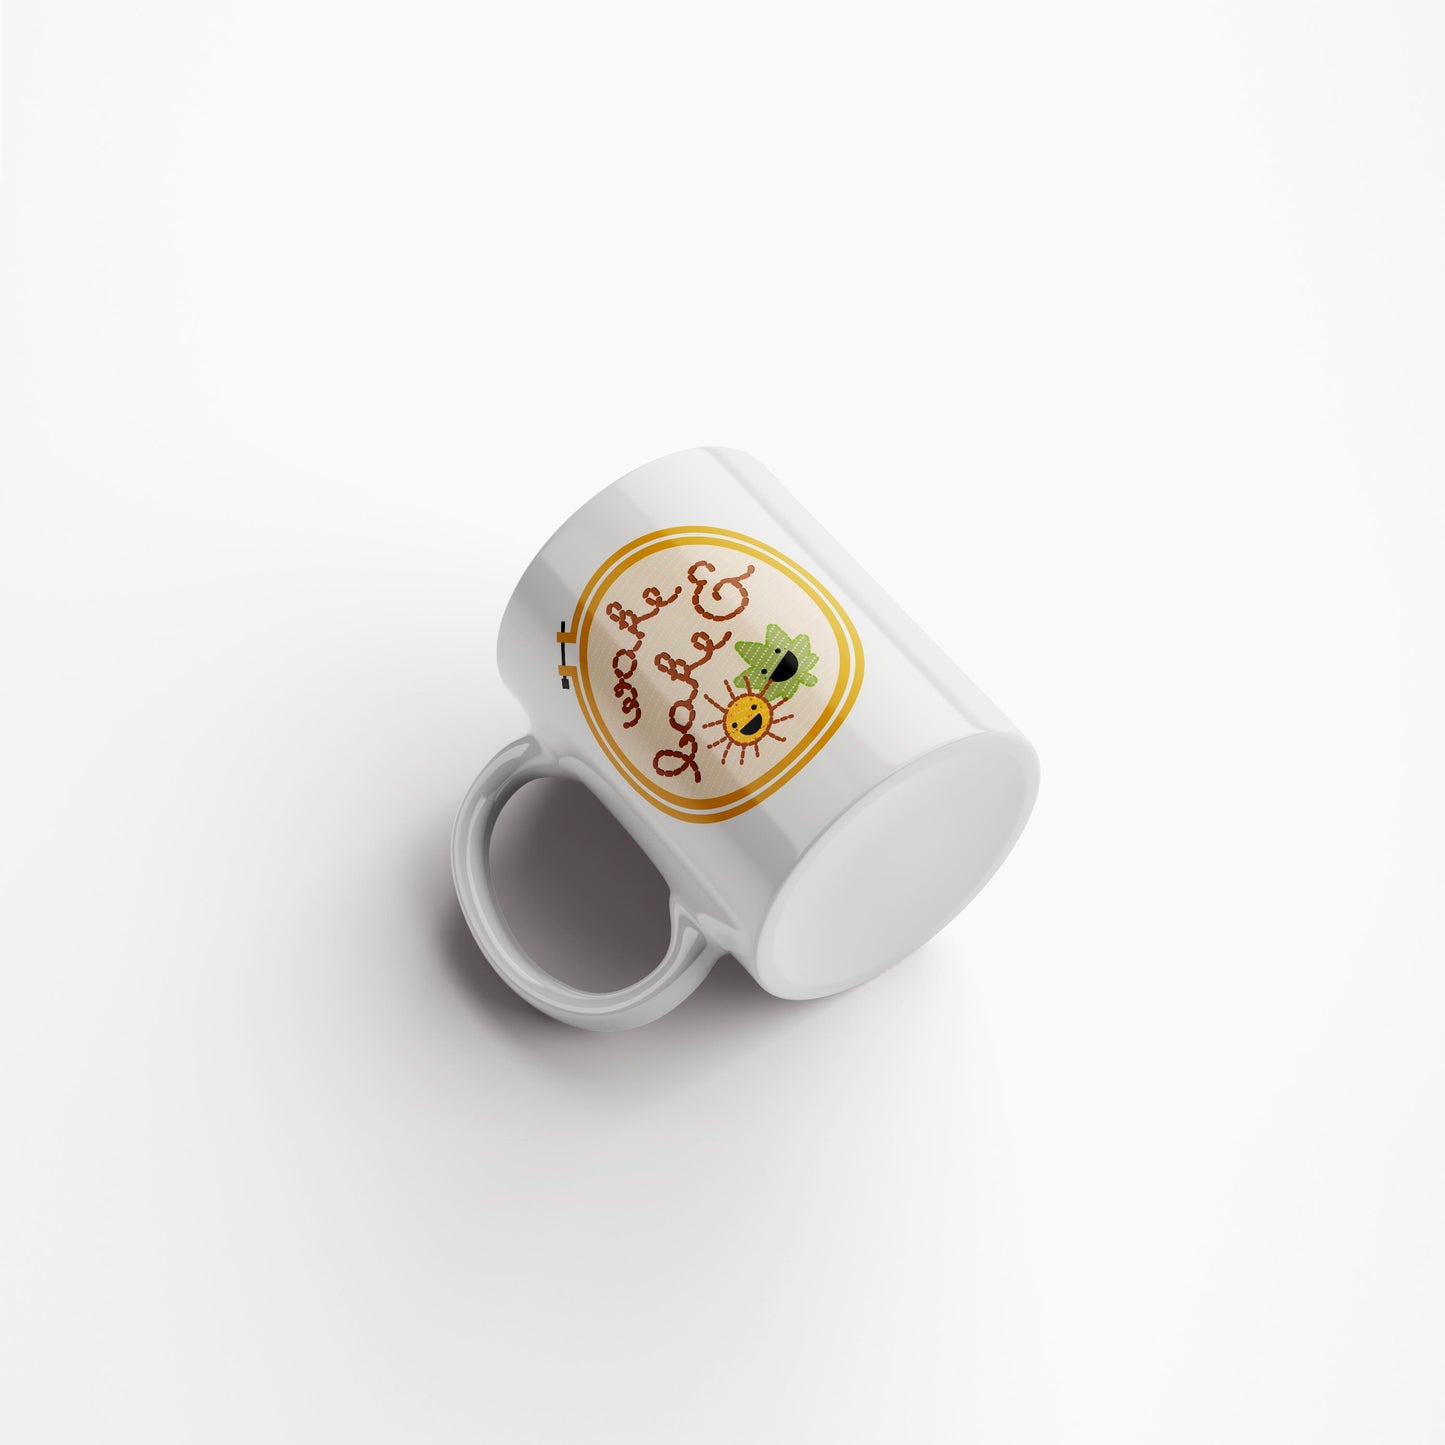 wake & bake  - cannabis themed mug by fntsma